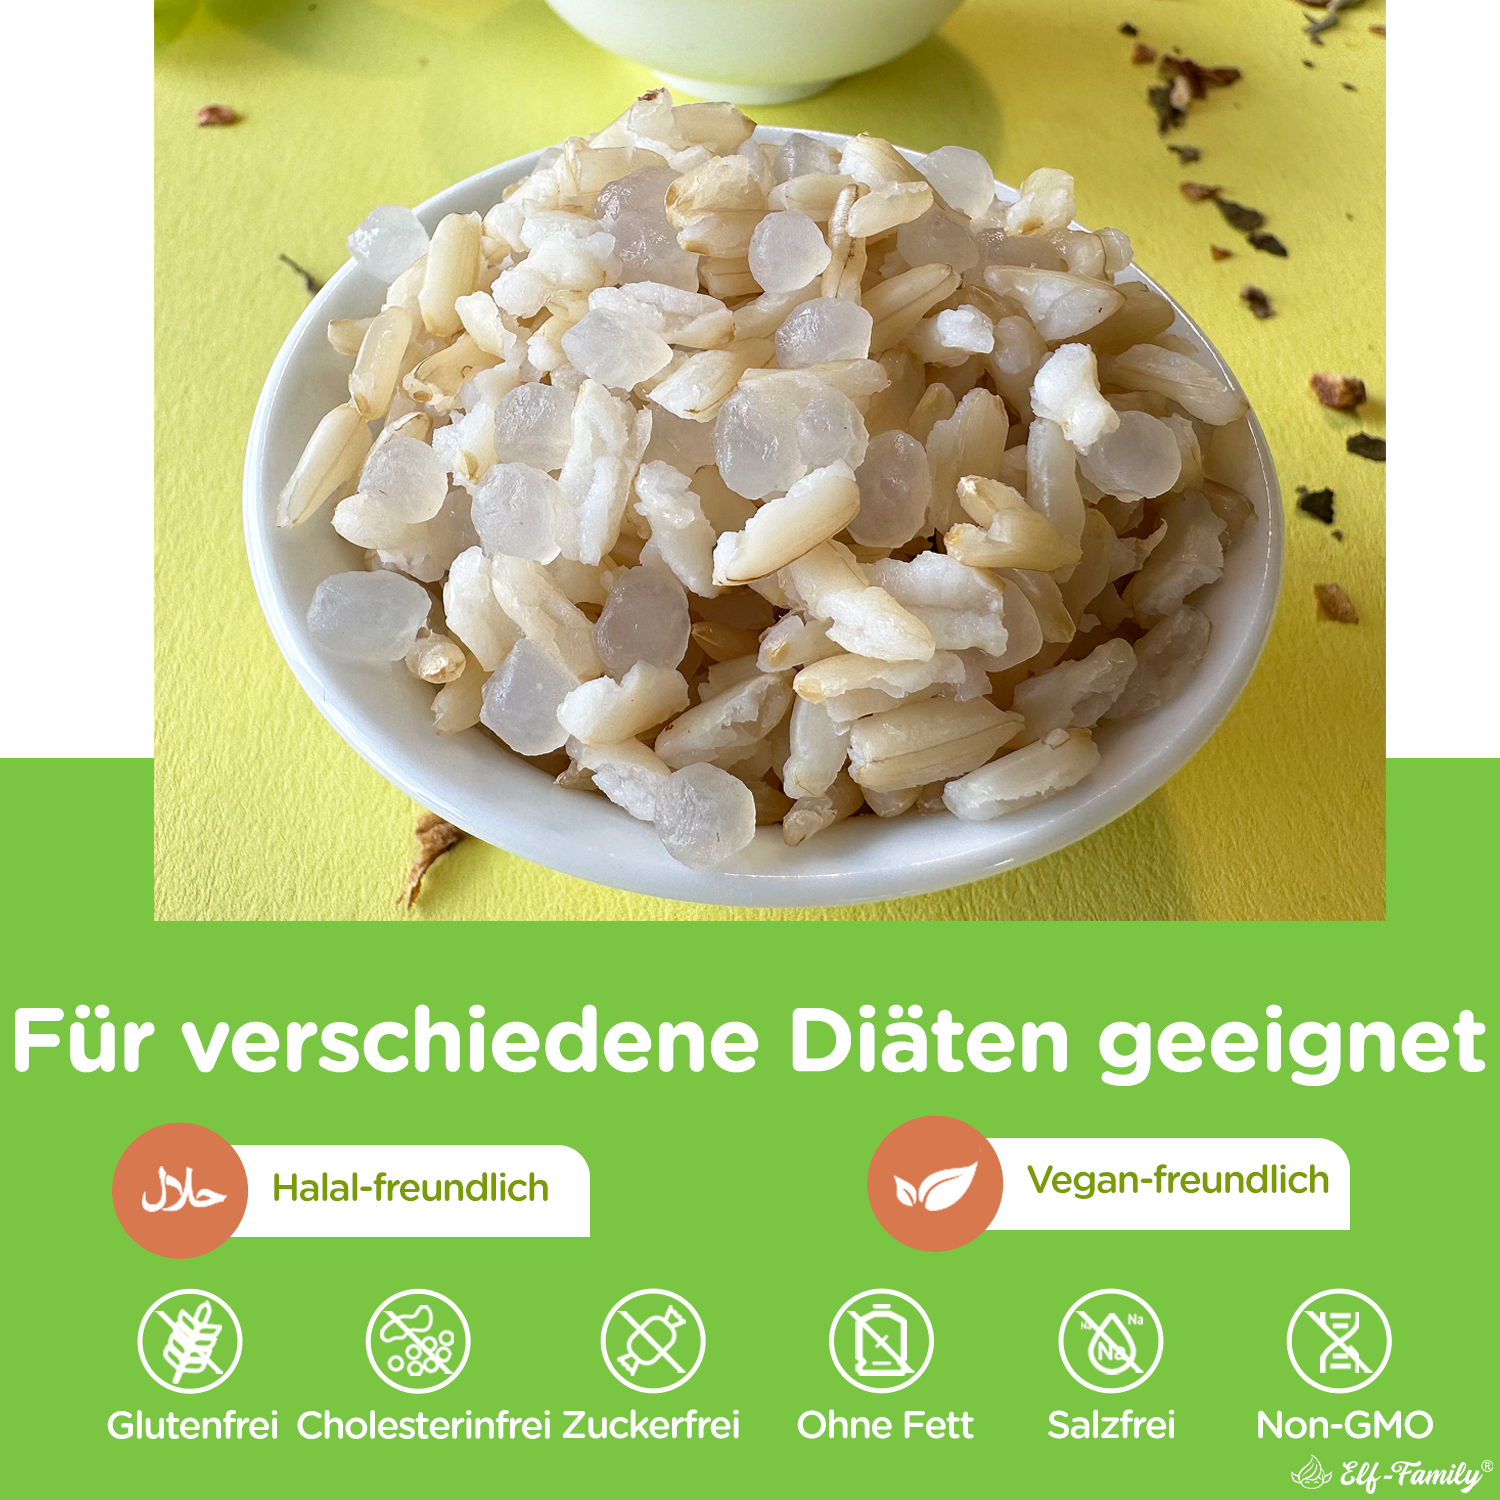 Elf-Family Brauner Jasminreis Konjak Reis Bowl - für Vegan Diät, Ketogene Ernährung, Low Carb Rezepte, Mahlzeitenersatz